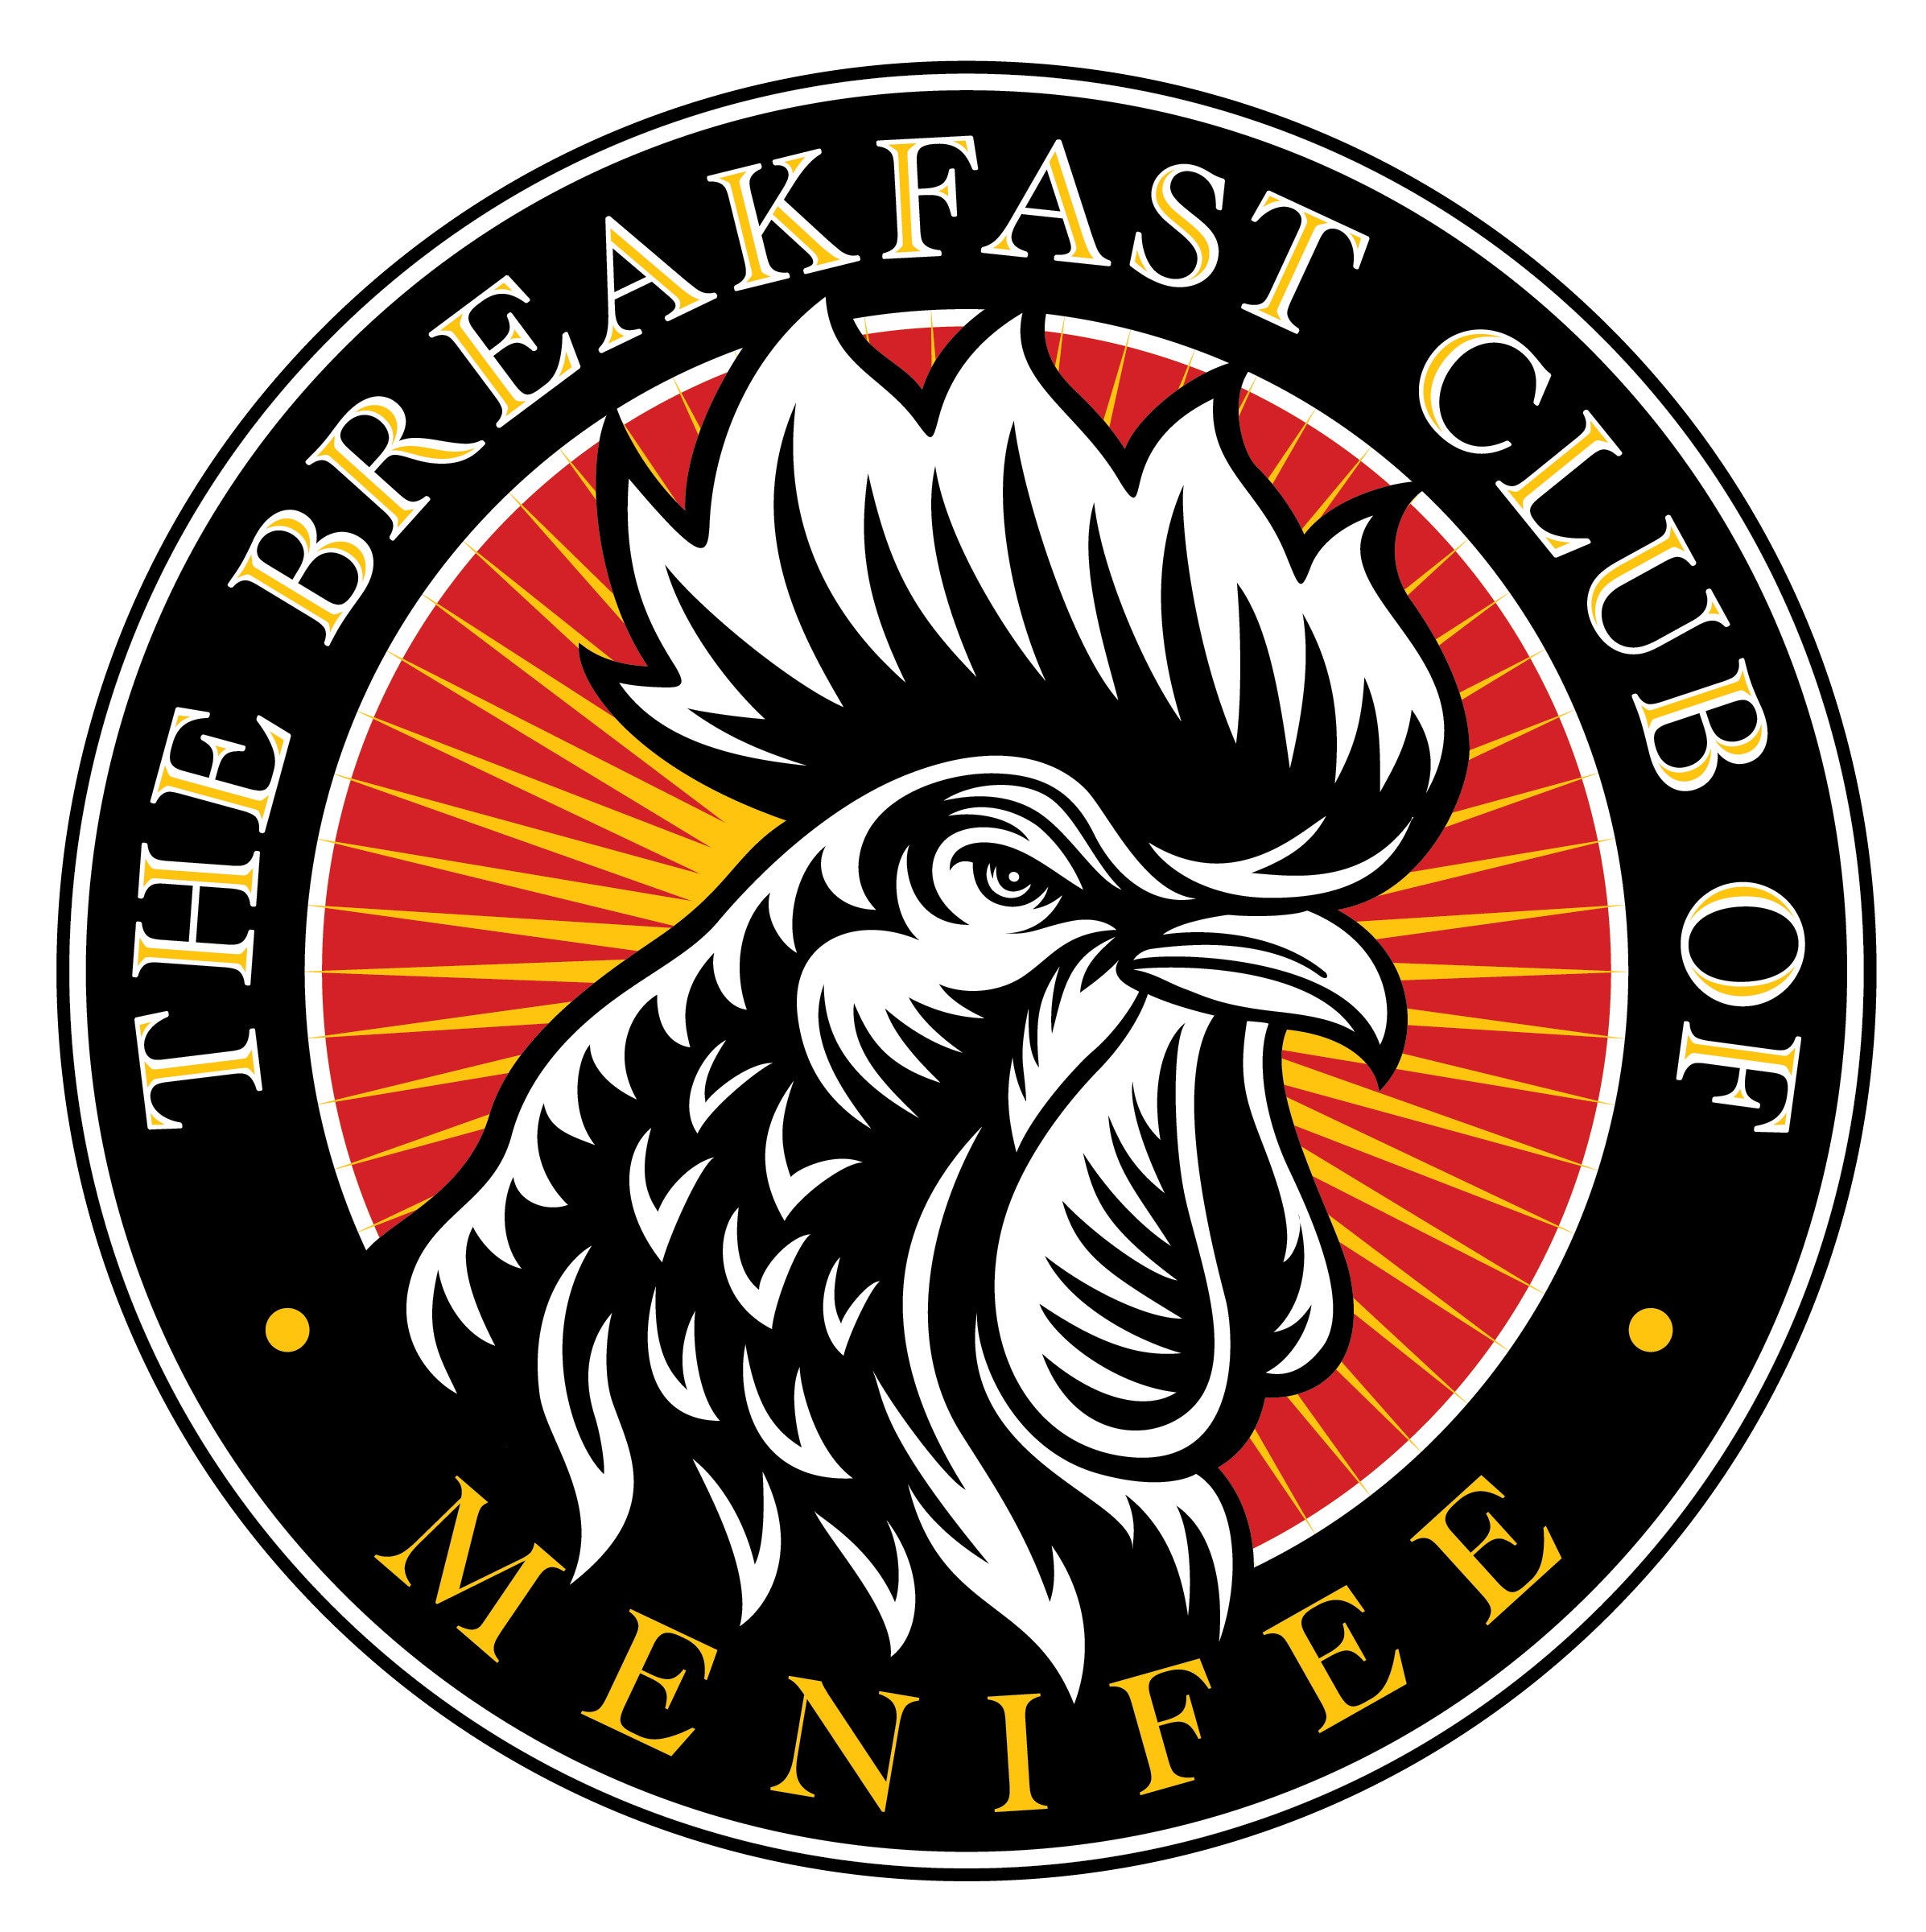 Breakfast Club of Menifee Culinary Business Establishment Nominee